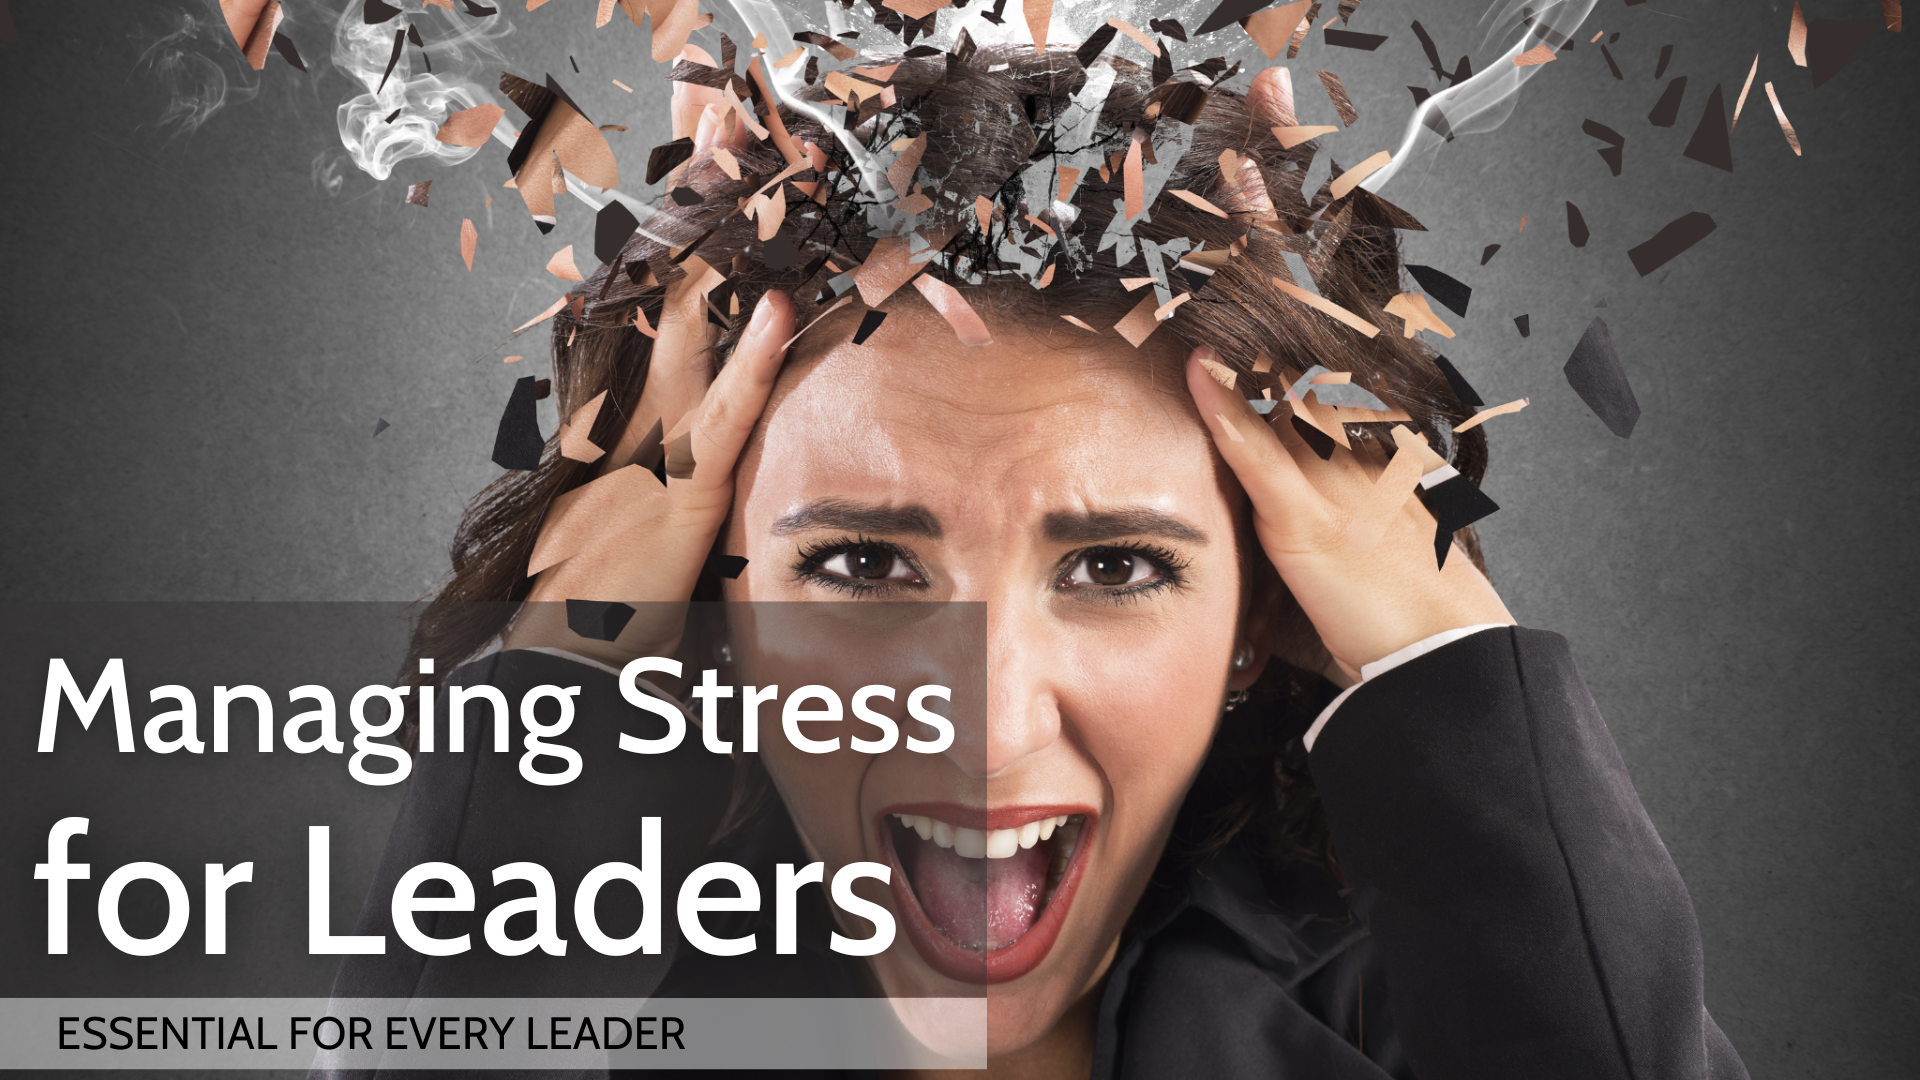 Managing stress for leaders, executive training, leadership training, Mastering stress for leaders, Harnessing stress, Leadership training, Executive and senior leadership program.